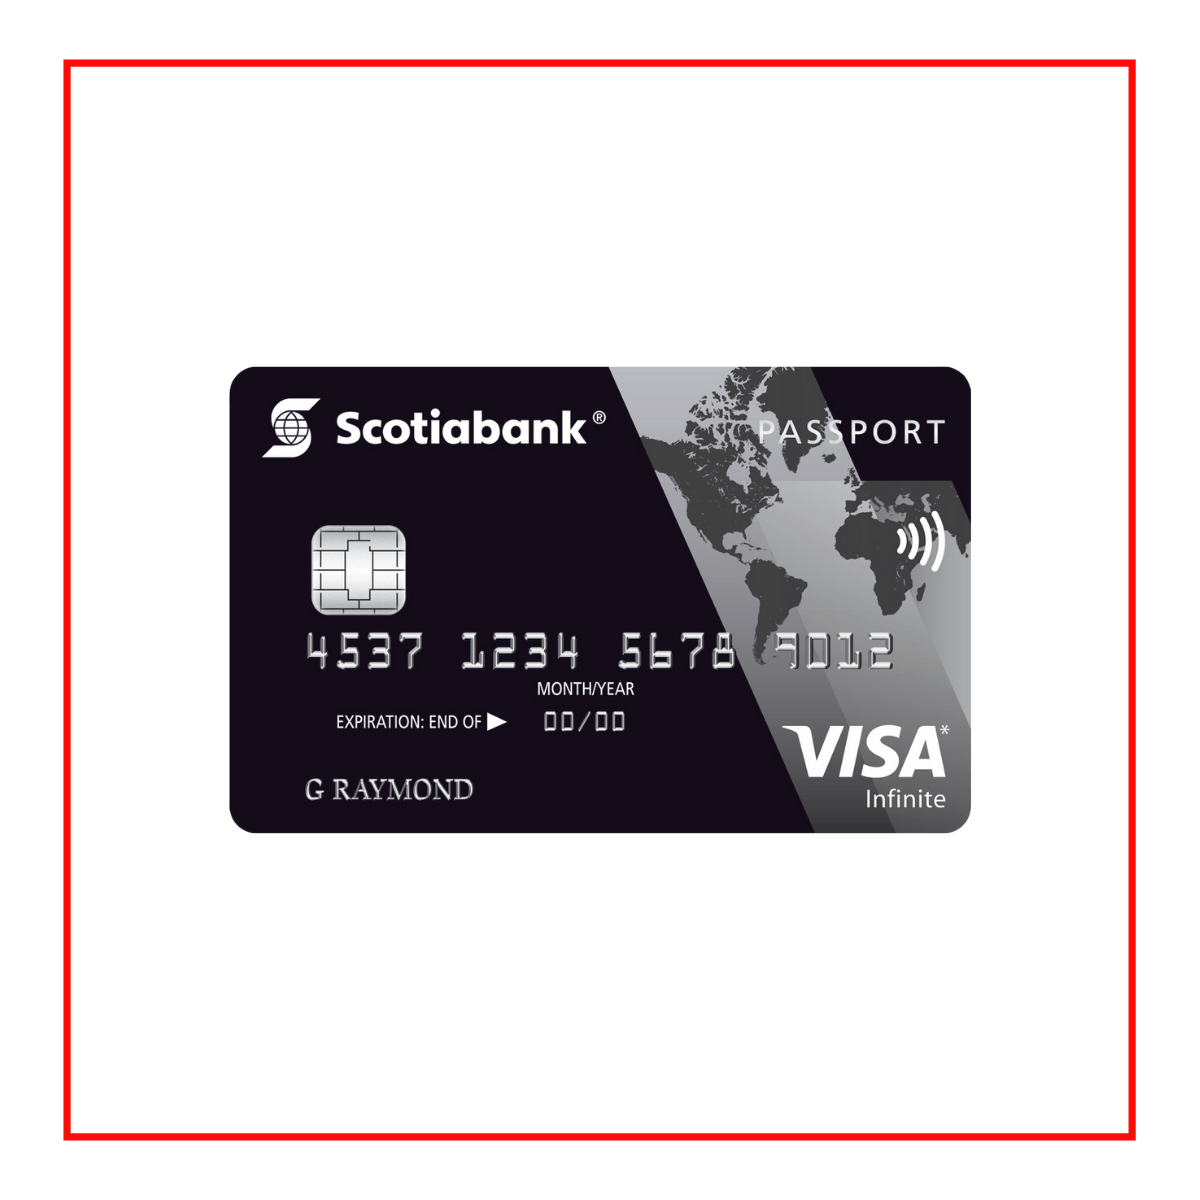 scotiabank passport visa trip cancellation insurance